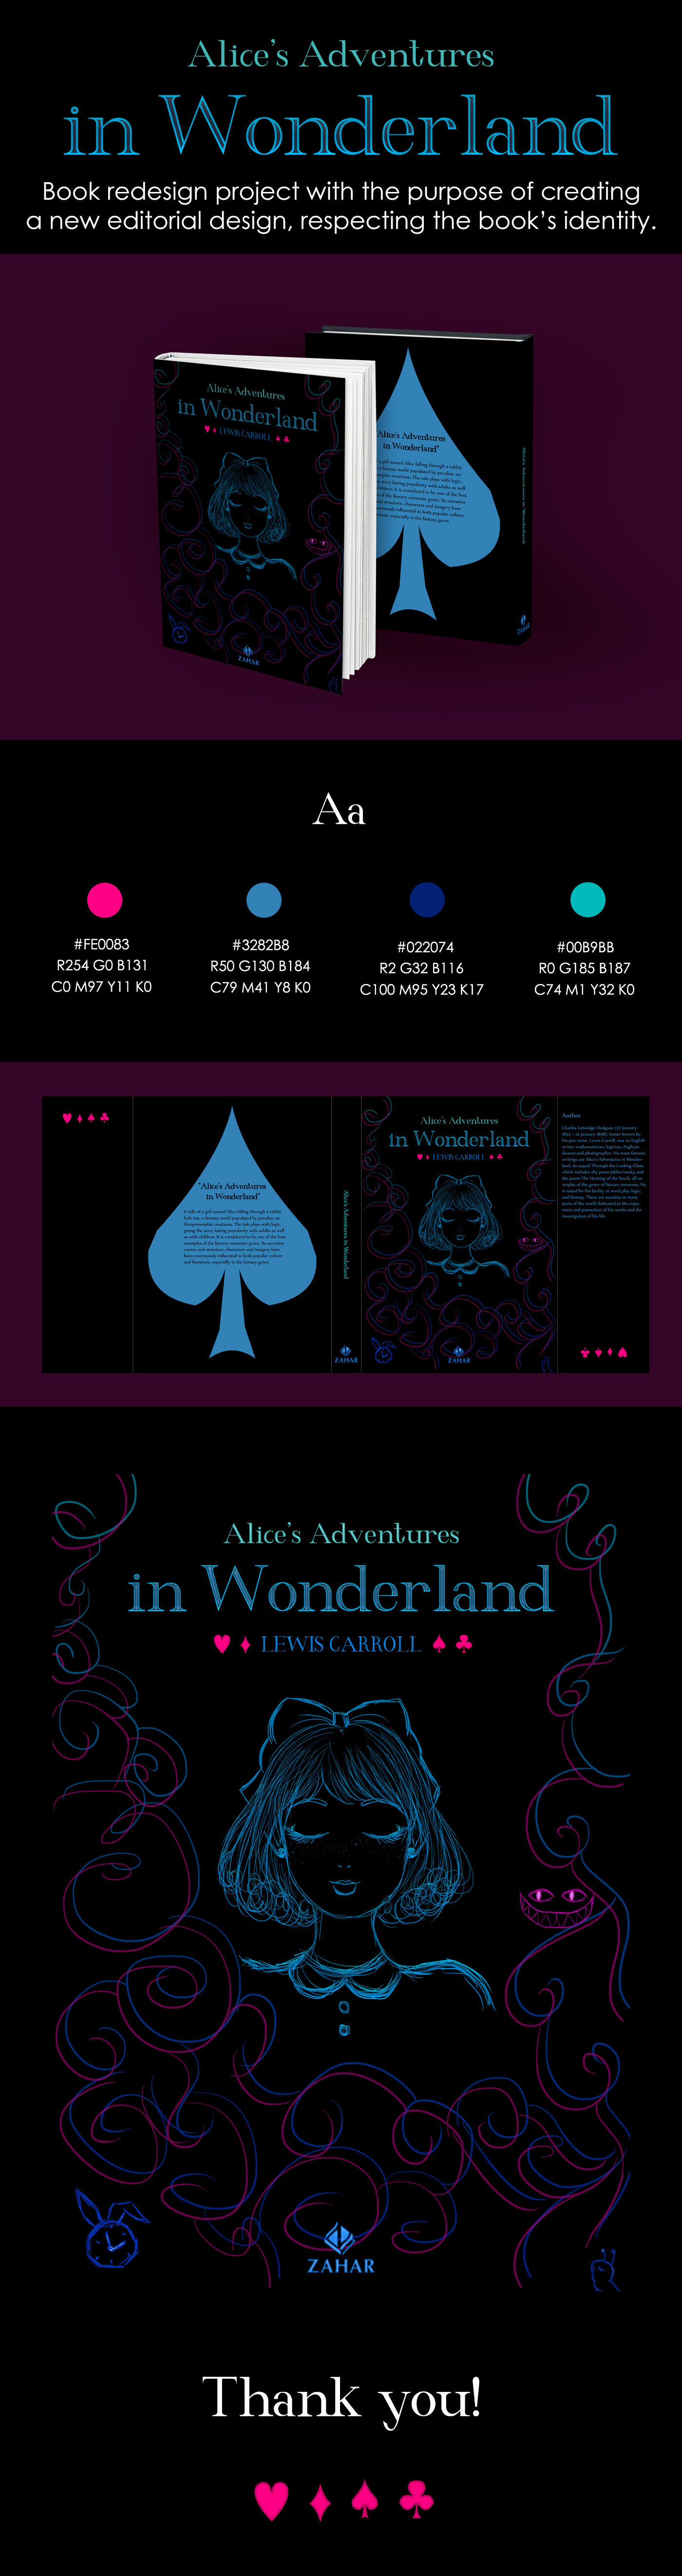 alice wonderland adventures book cover redesign editorial psychedelic alice in wonderland